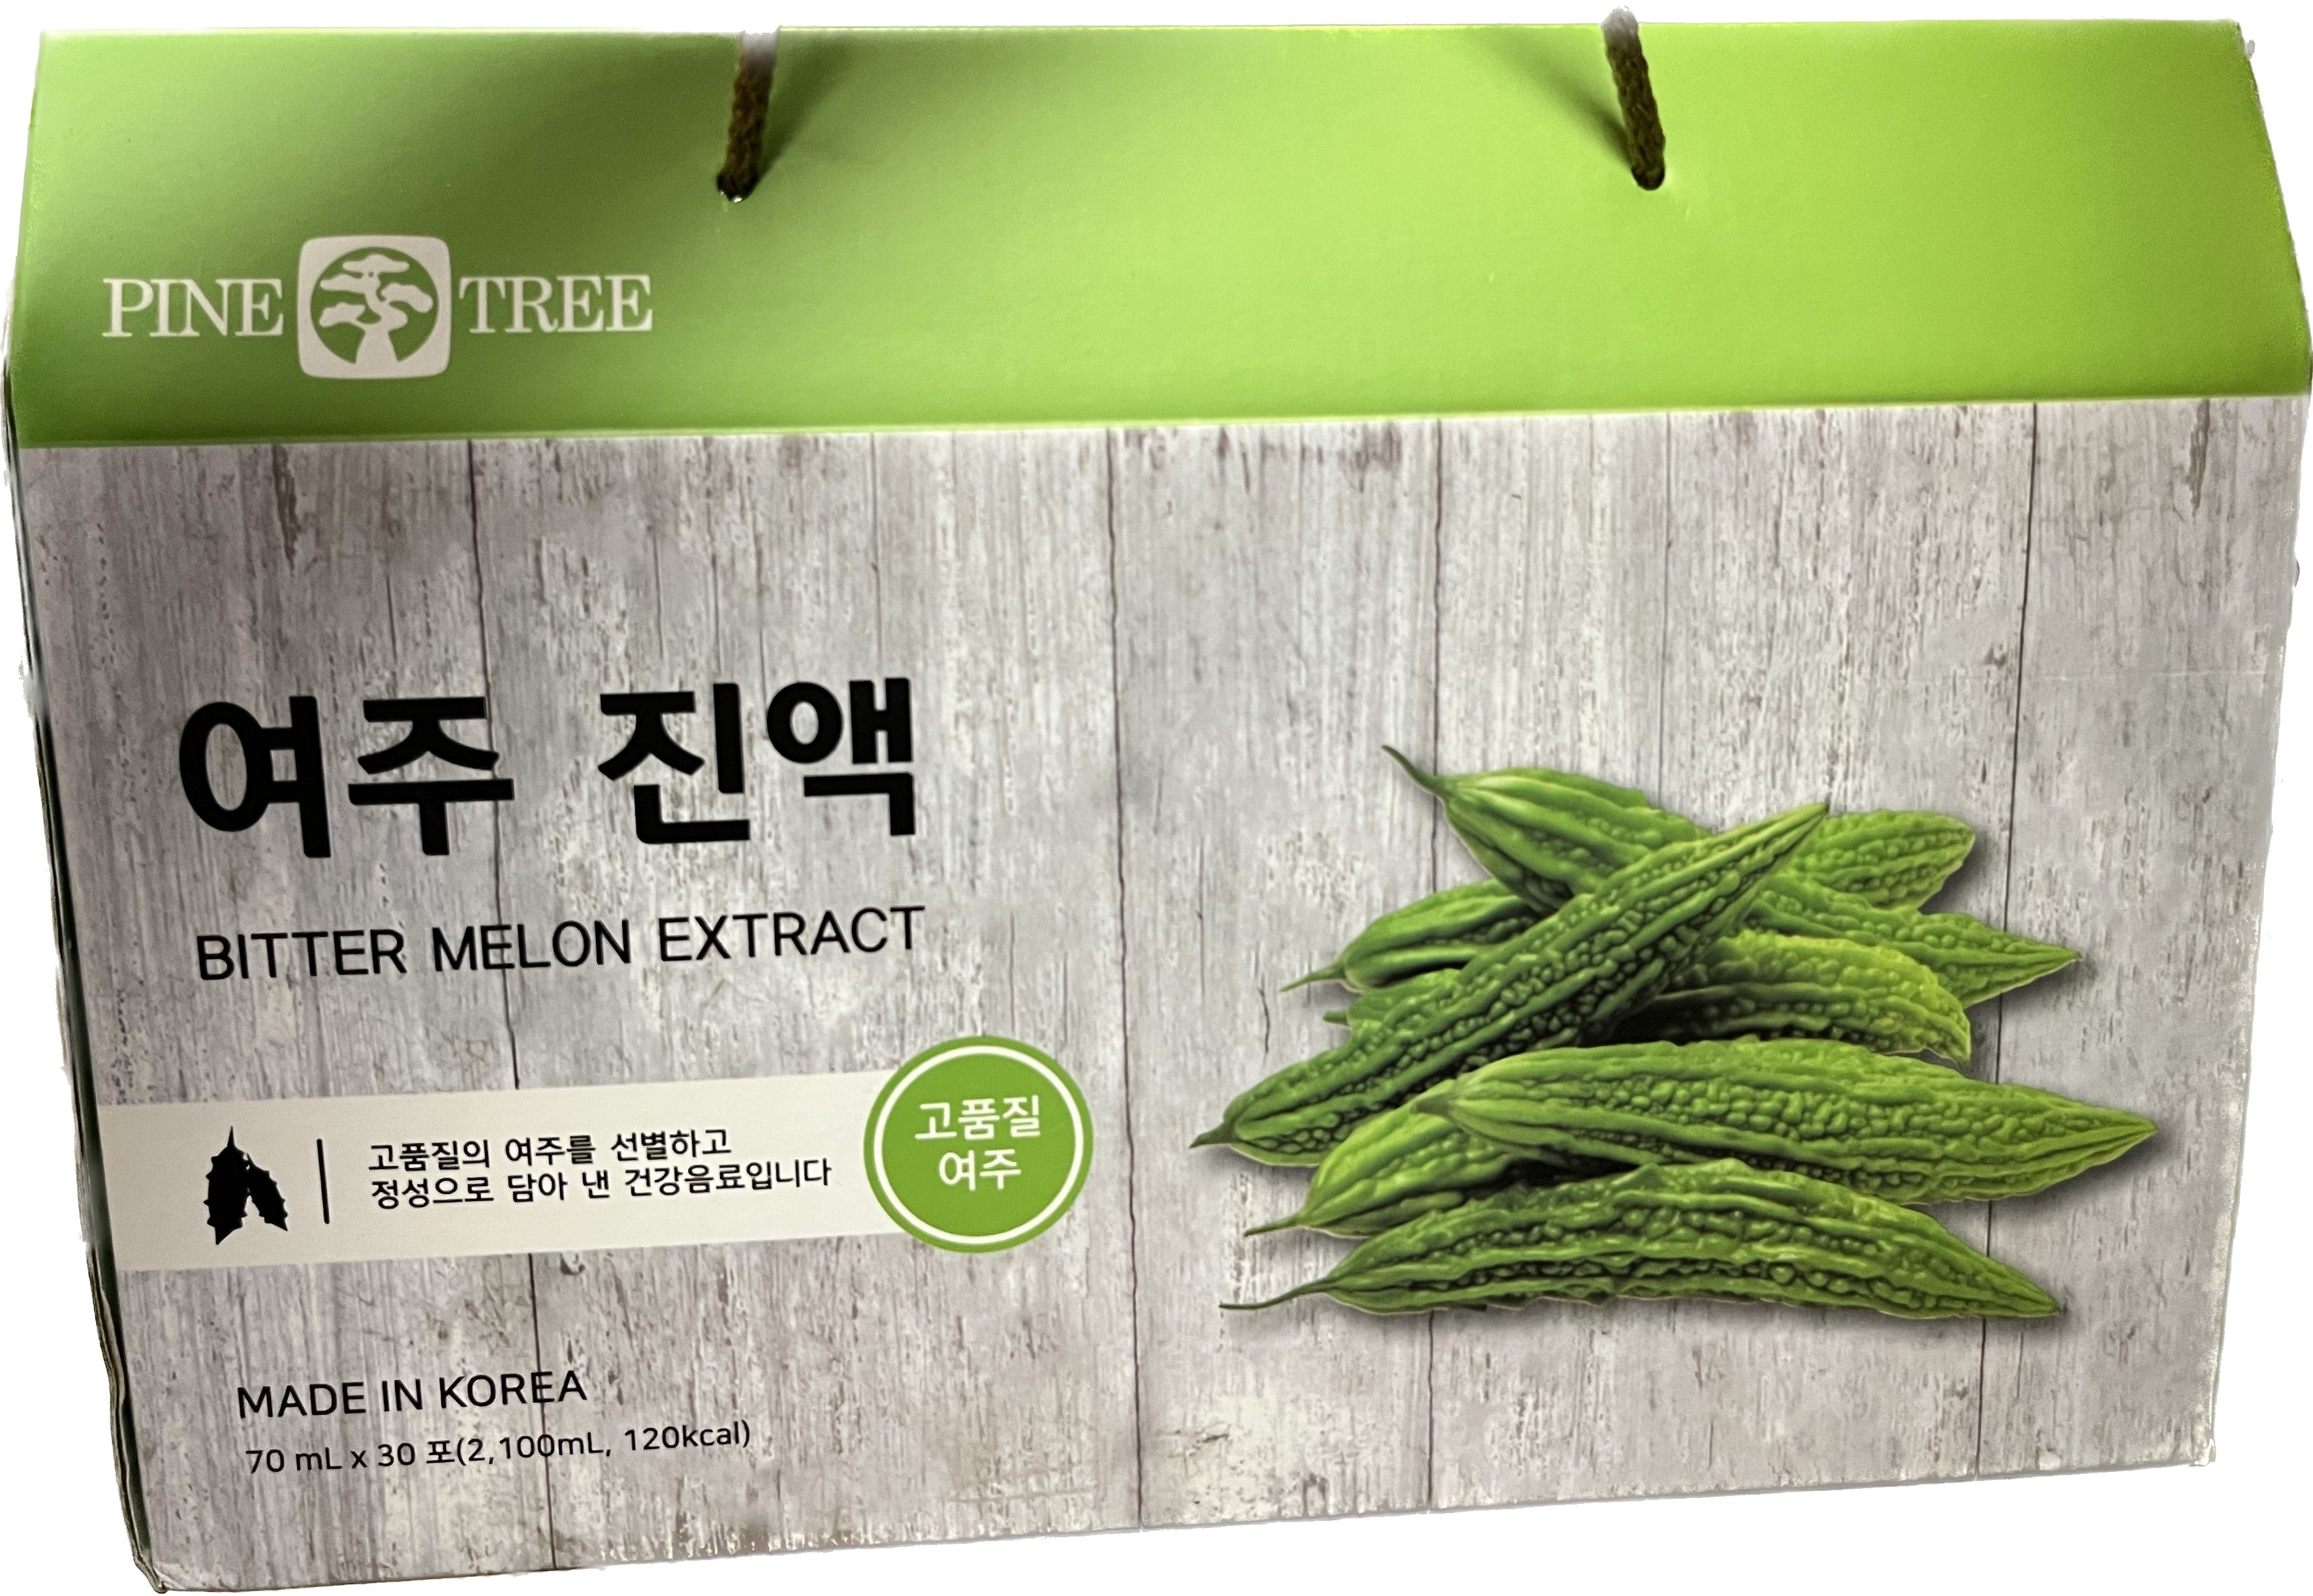 Pine Tree Brand- Bitter Melon Extract 70mL x 30